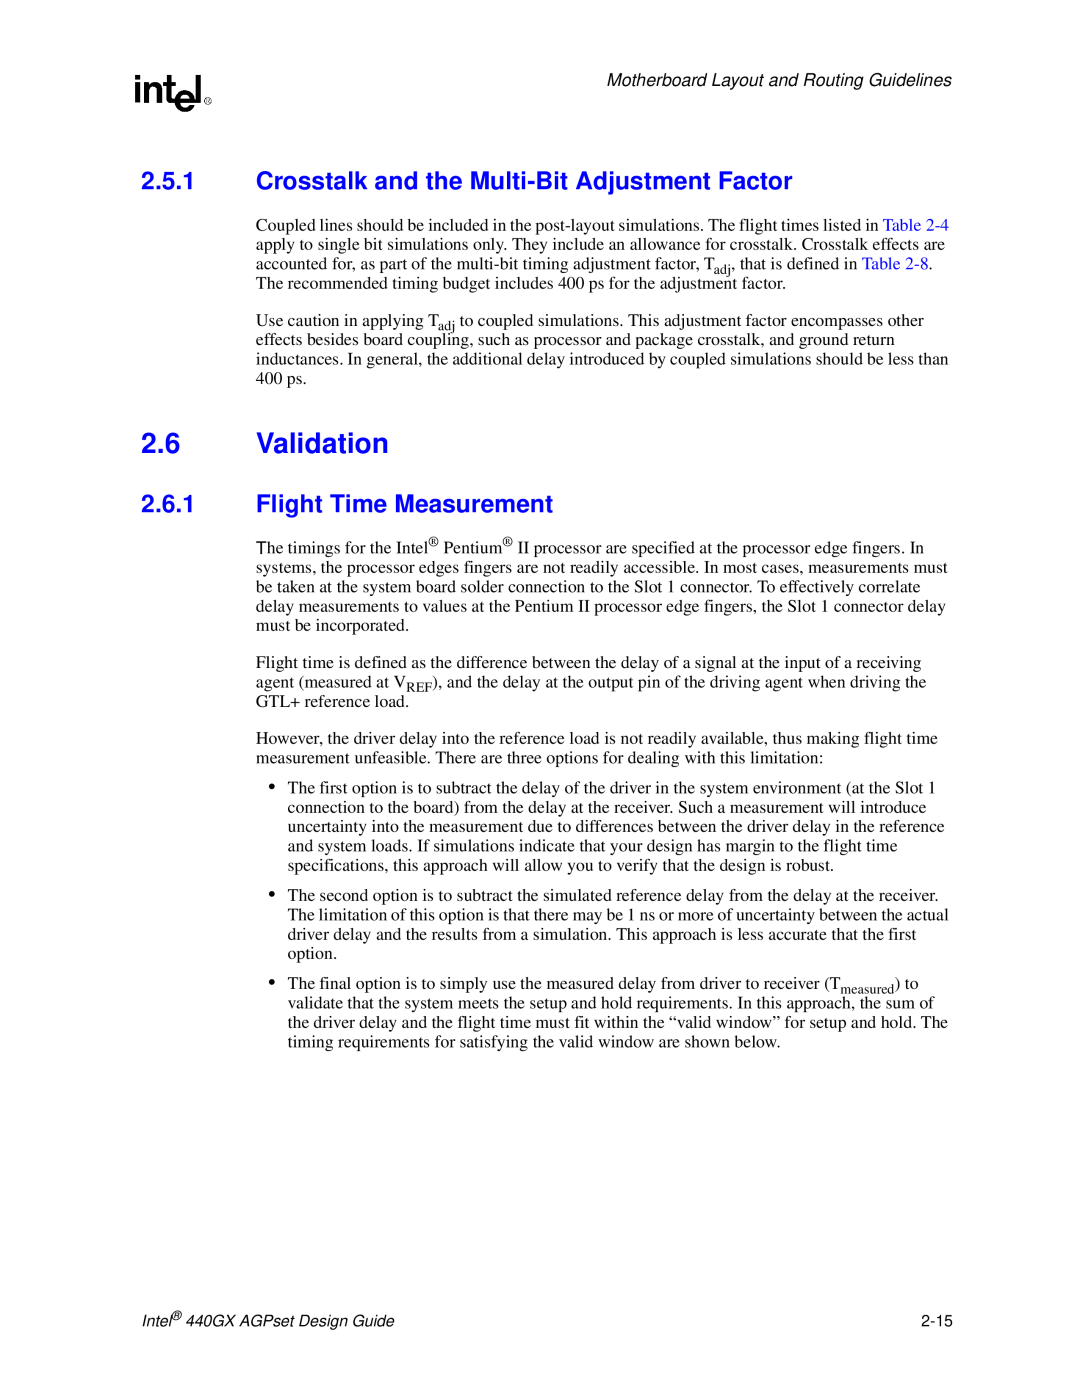 Intel 440GX manual Validation, Crosstalk and the Multi-Bit Adjustment Factor, Flight Time Measurement 